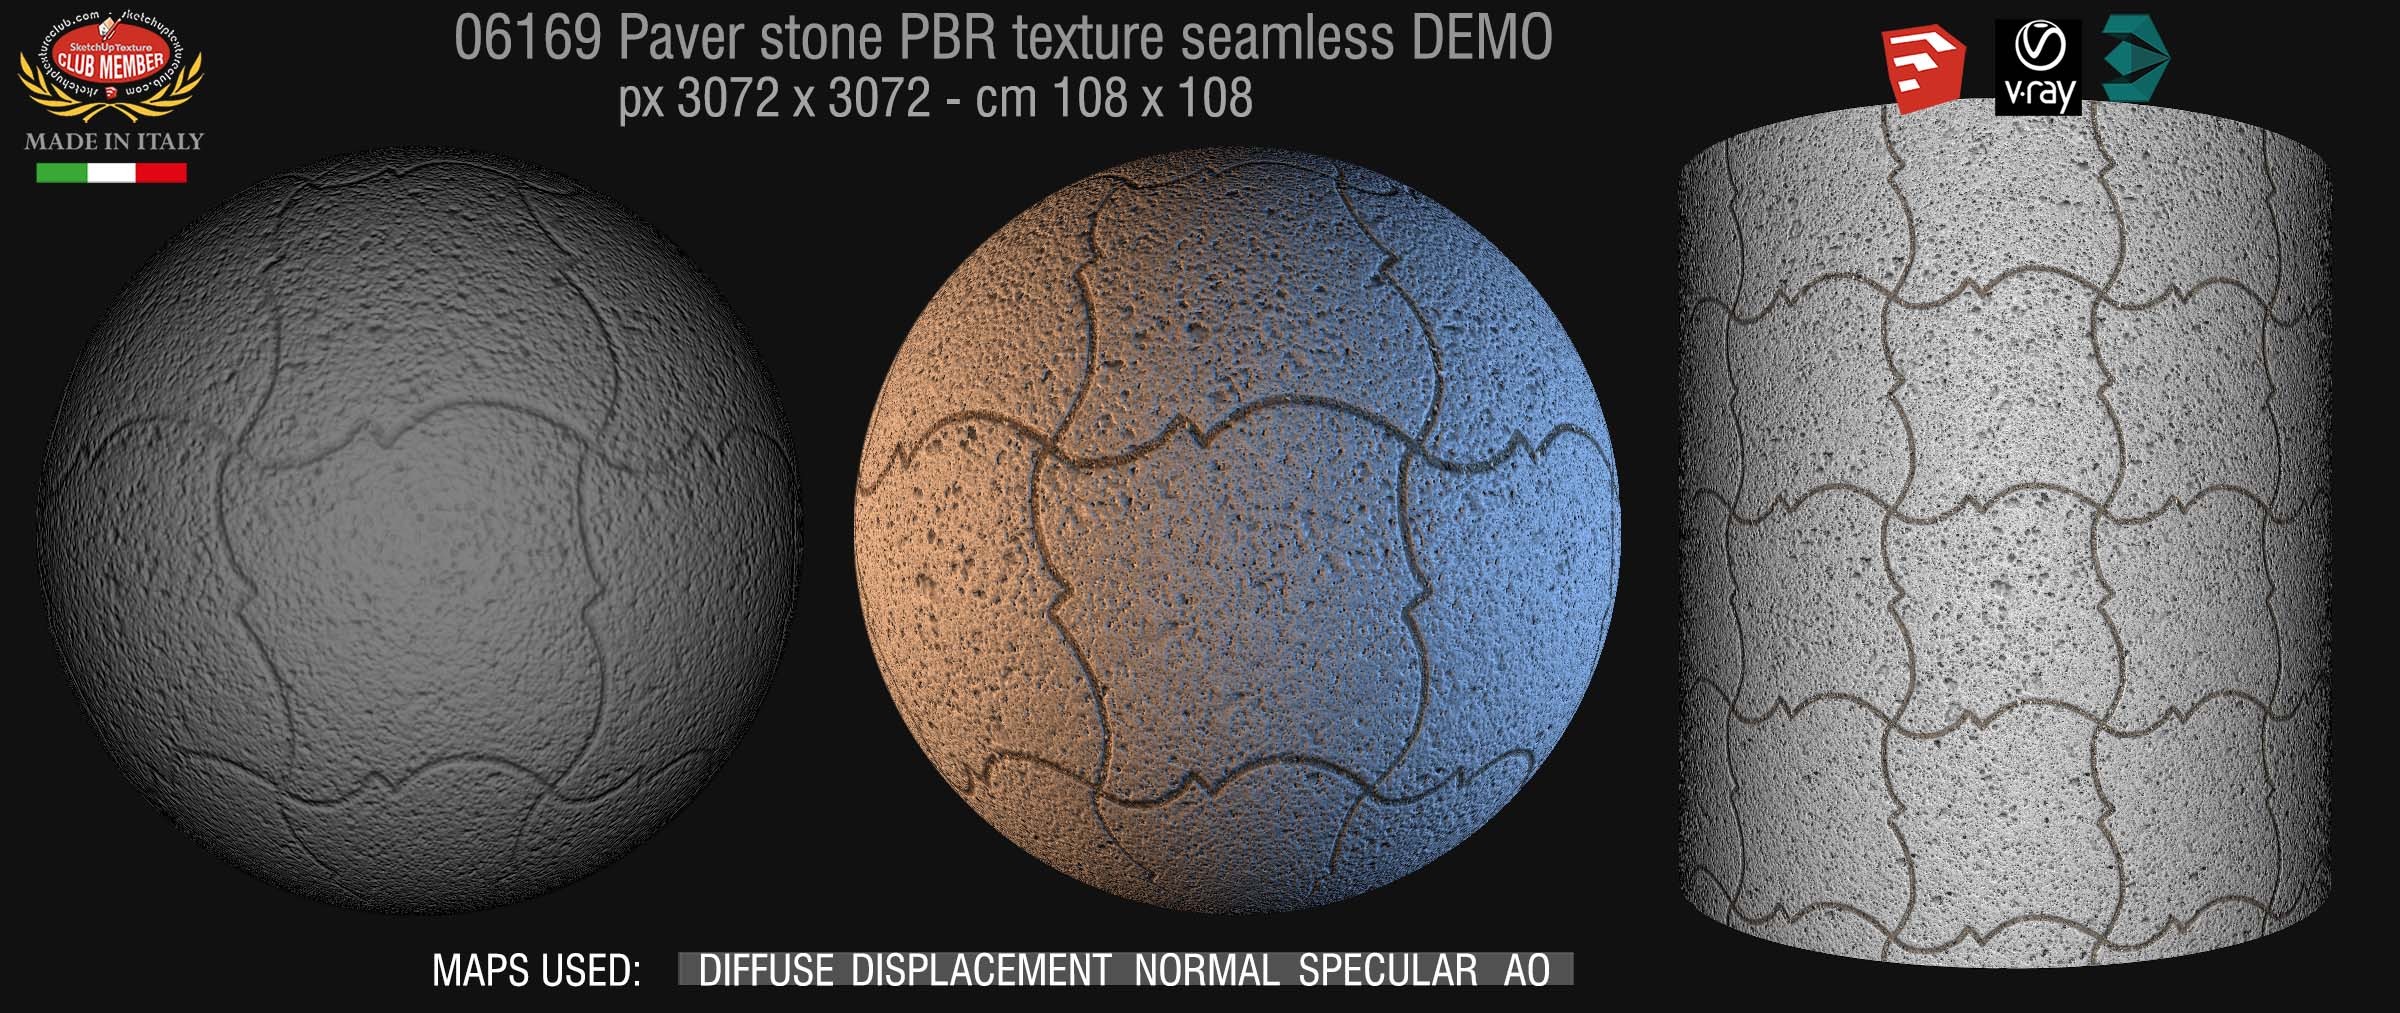 06169 paver stone PBR texture seamless DEMO